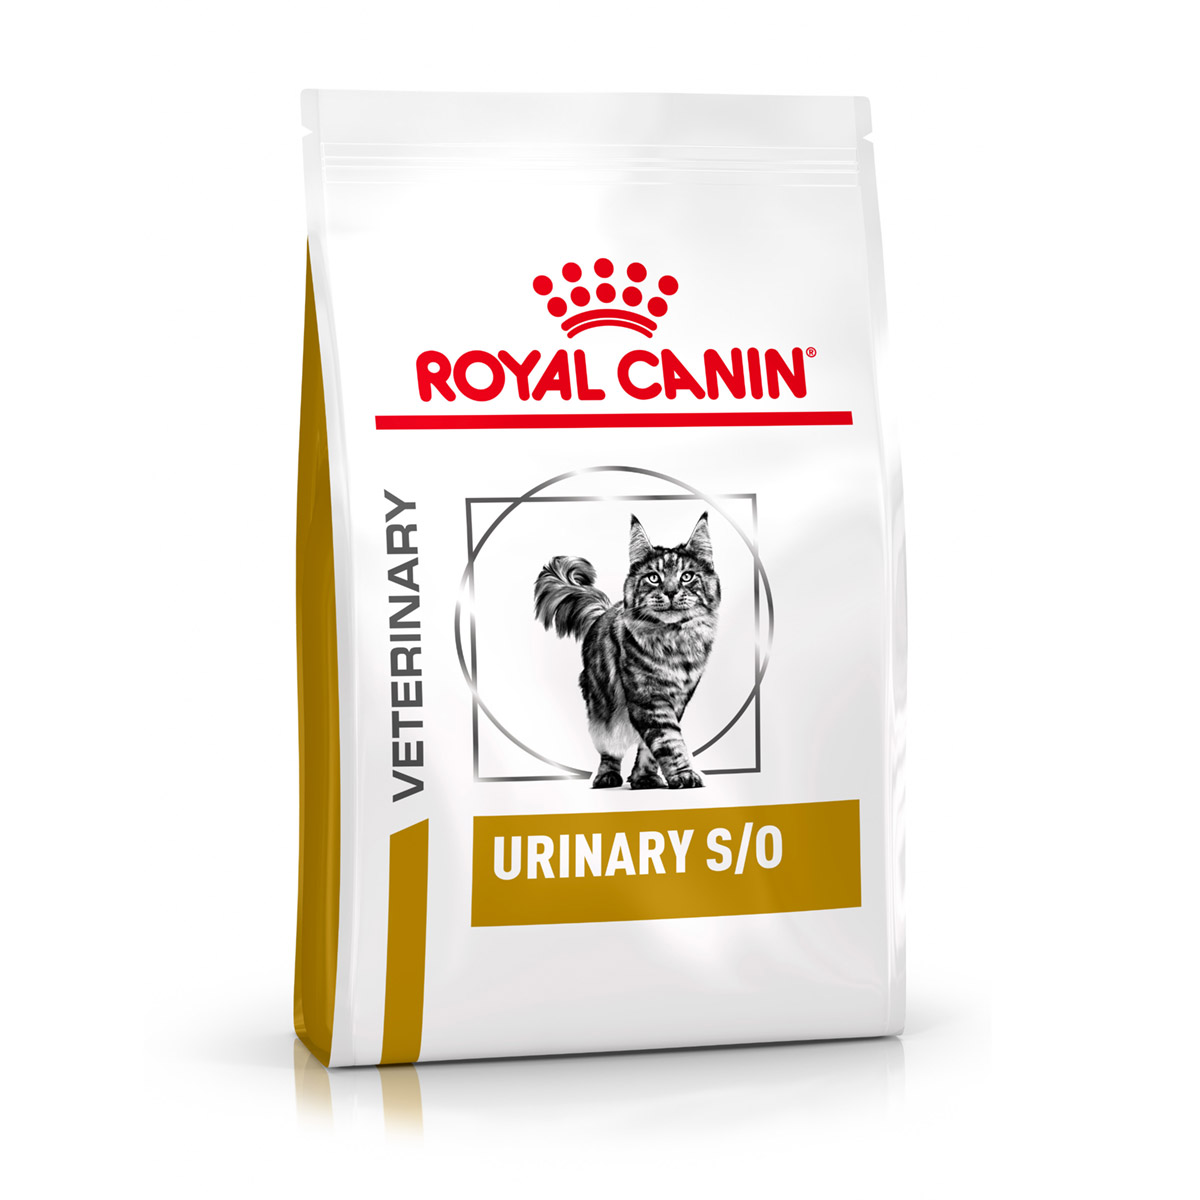 ROYAL CANIN® Veterinary URINARY S/O Trockenfutter für Katzen 2x9kg